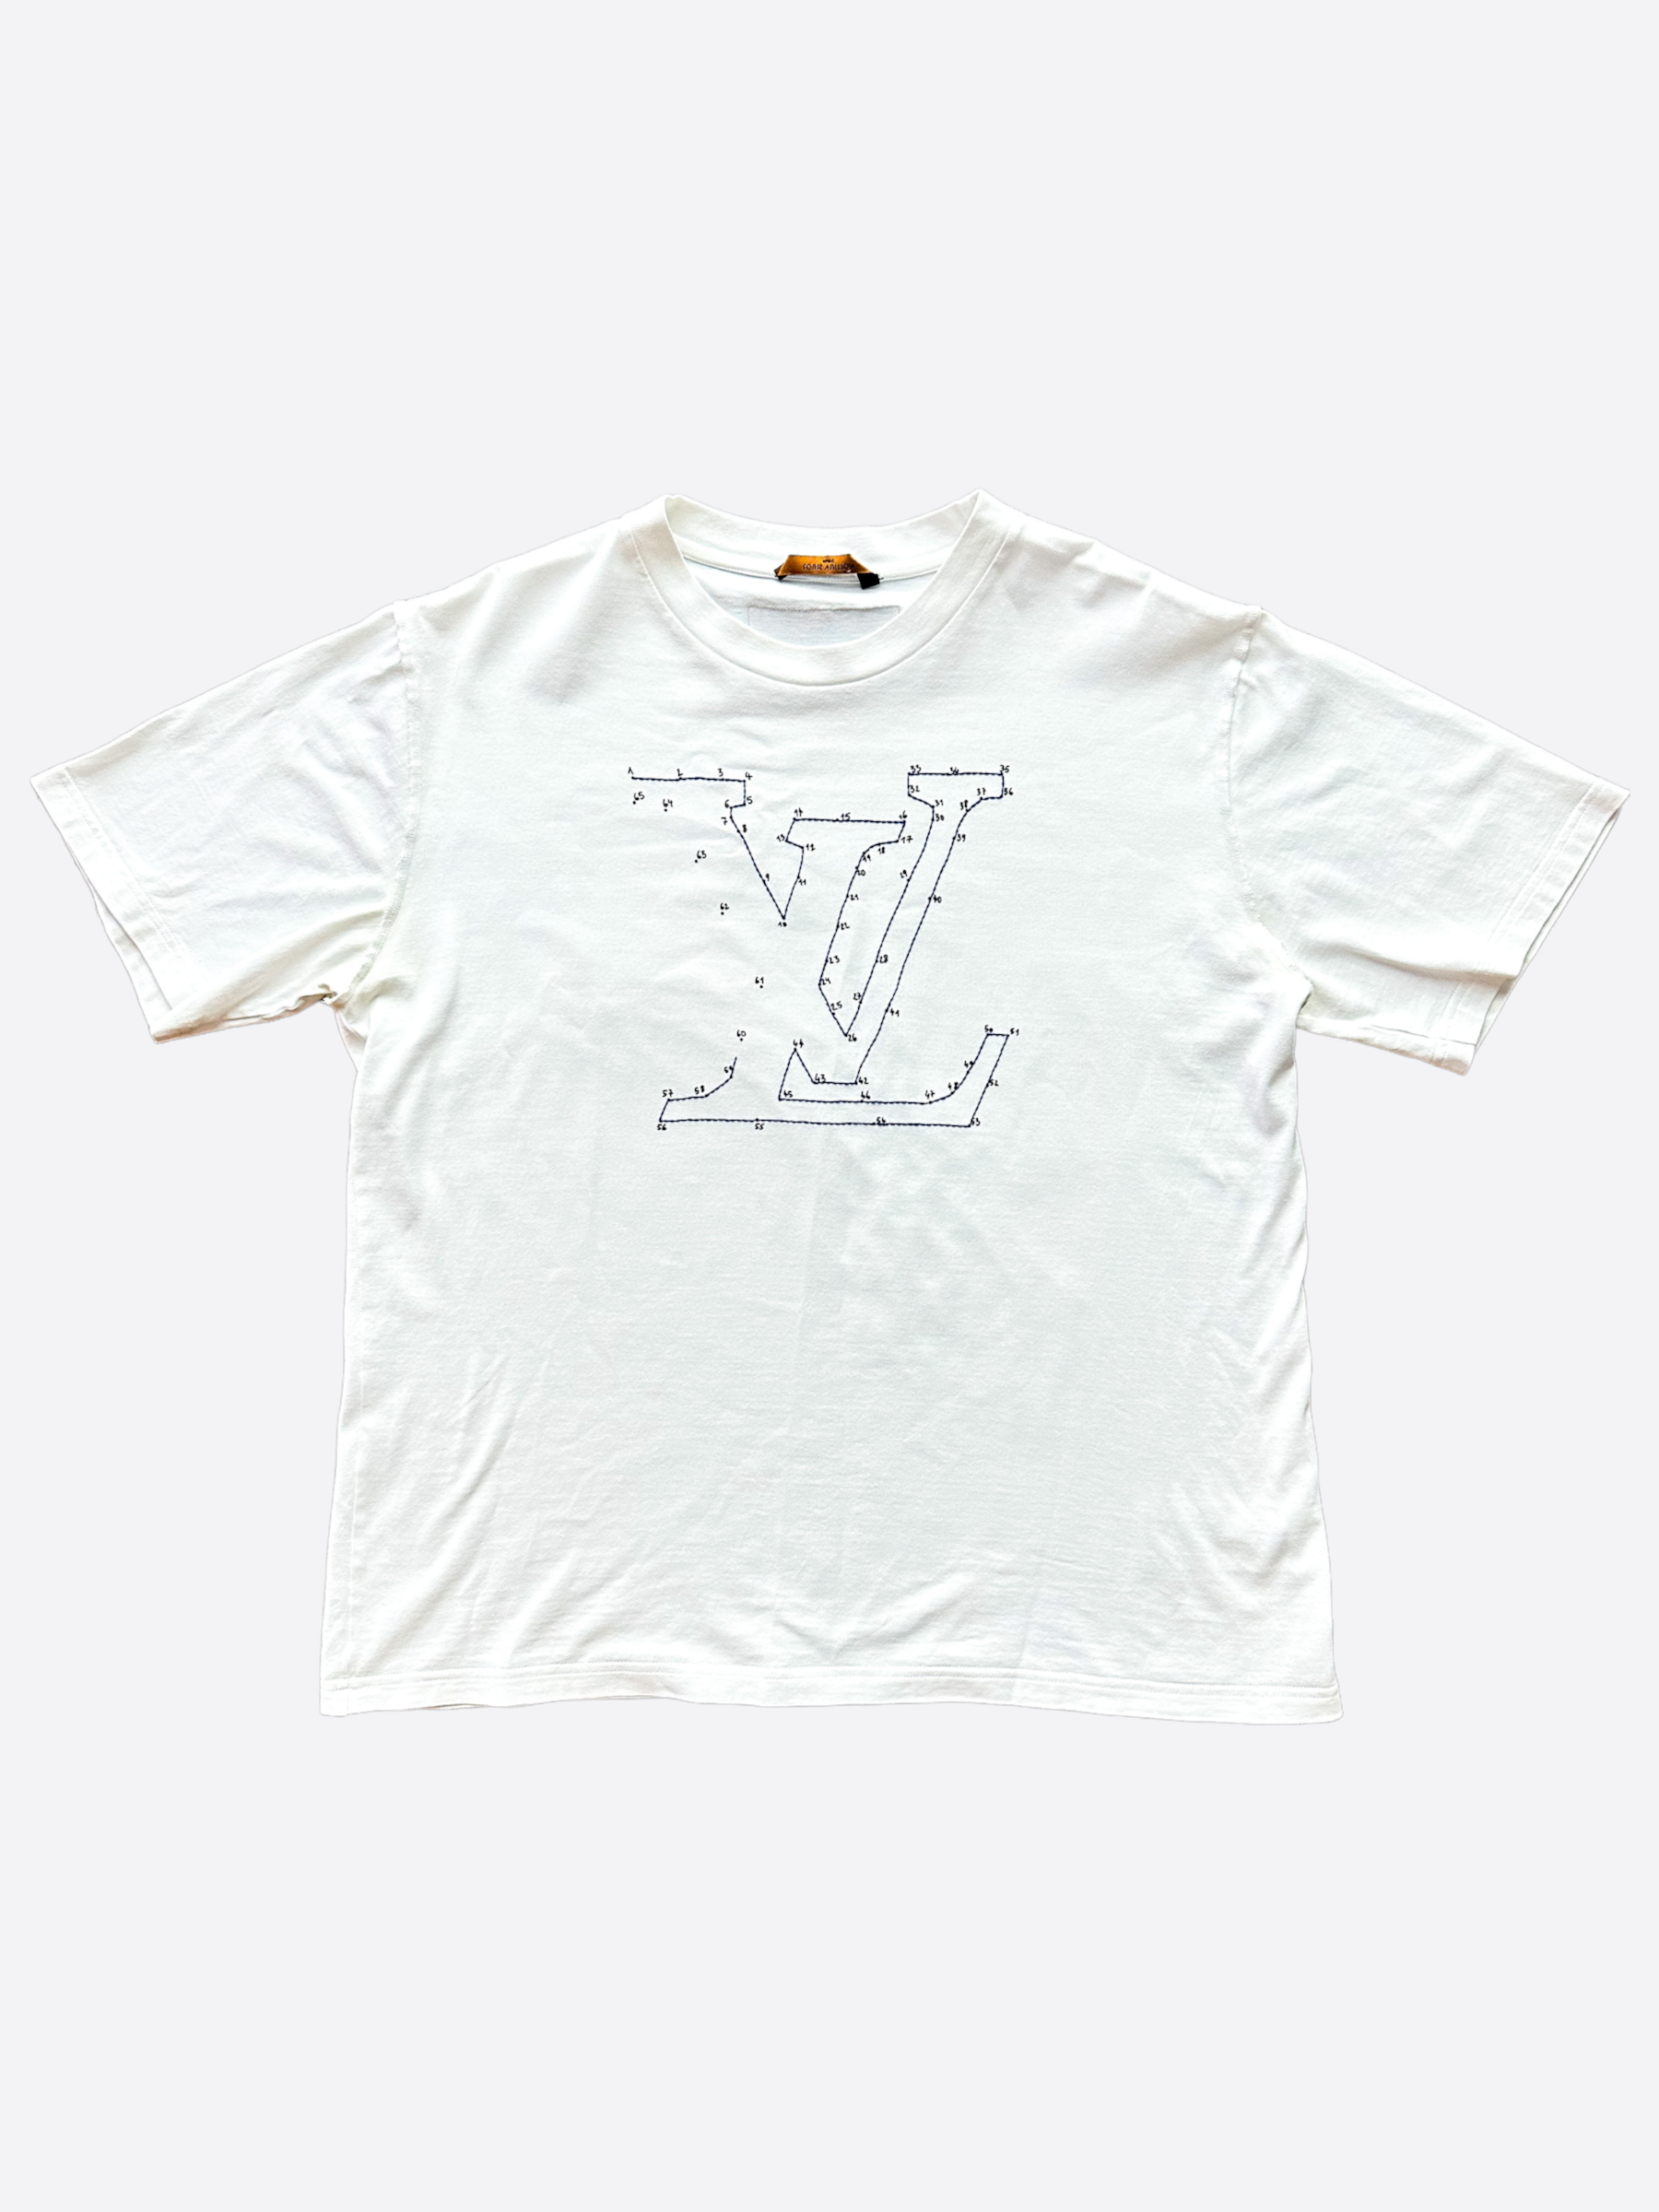 Louis Vuitton LV Stitch-Print Embroideredd